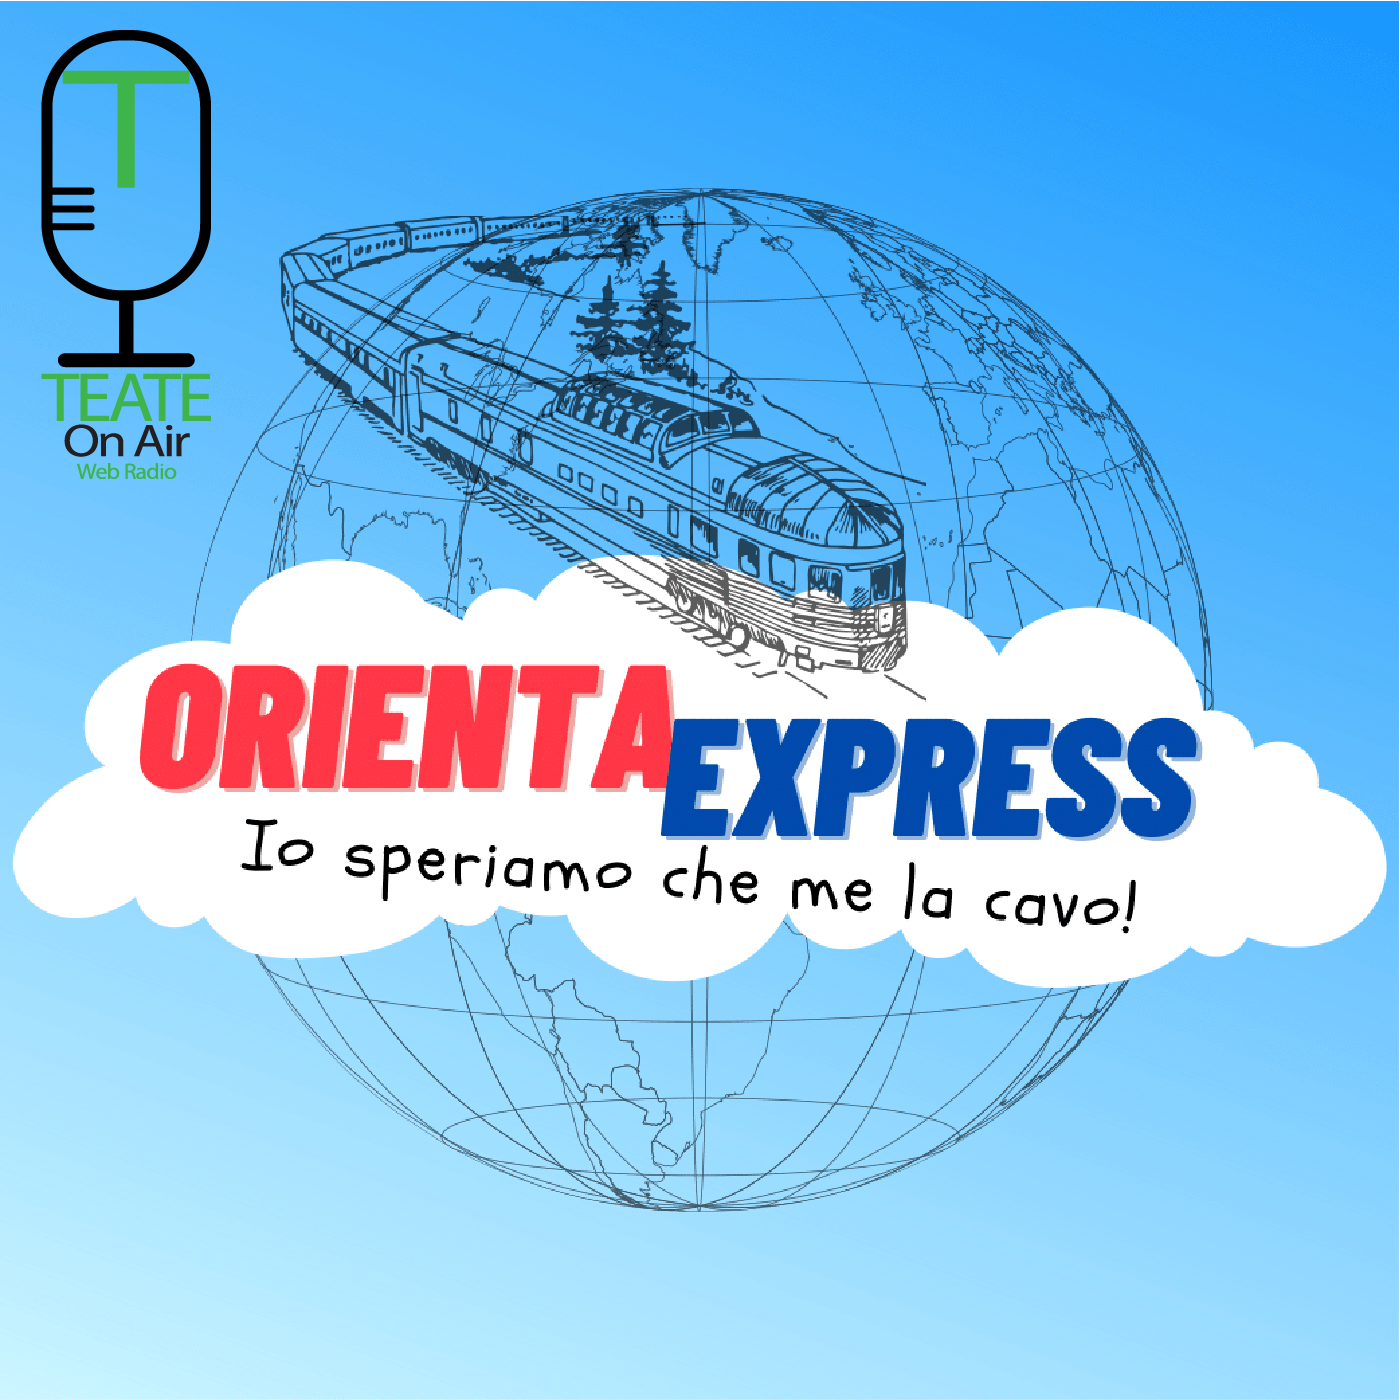 Copertina di "Orienta Express" + Logo ToA